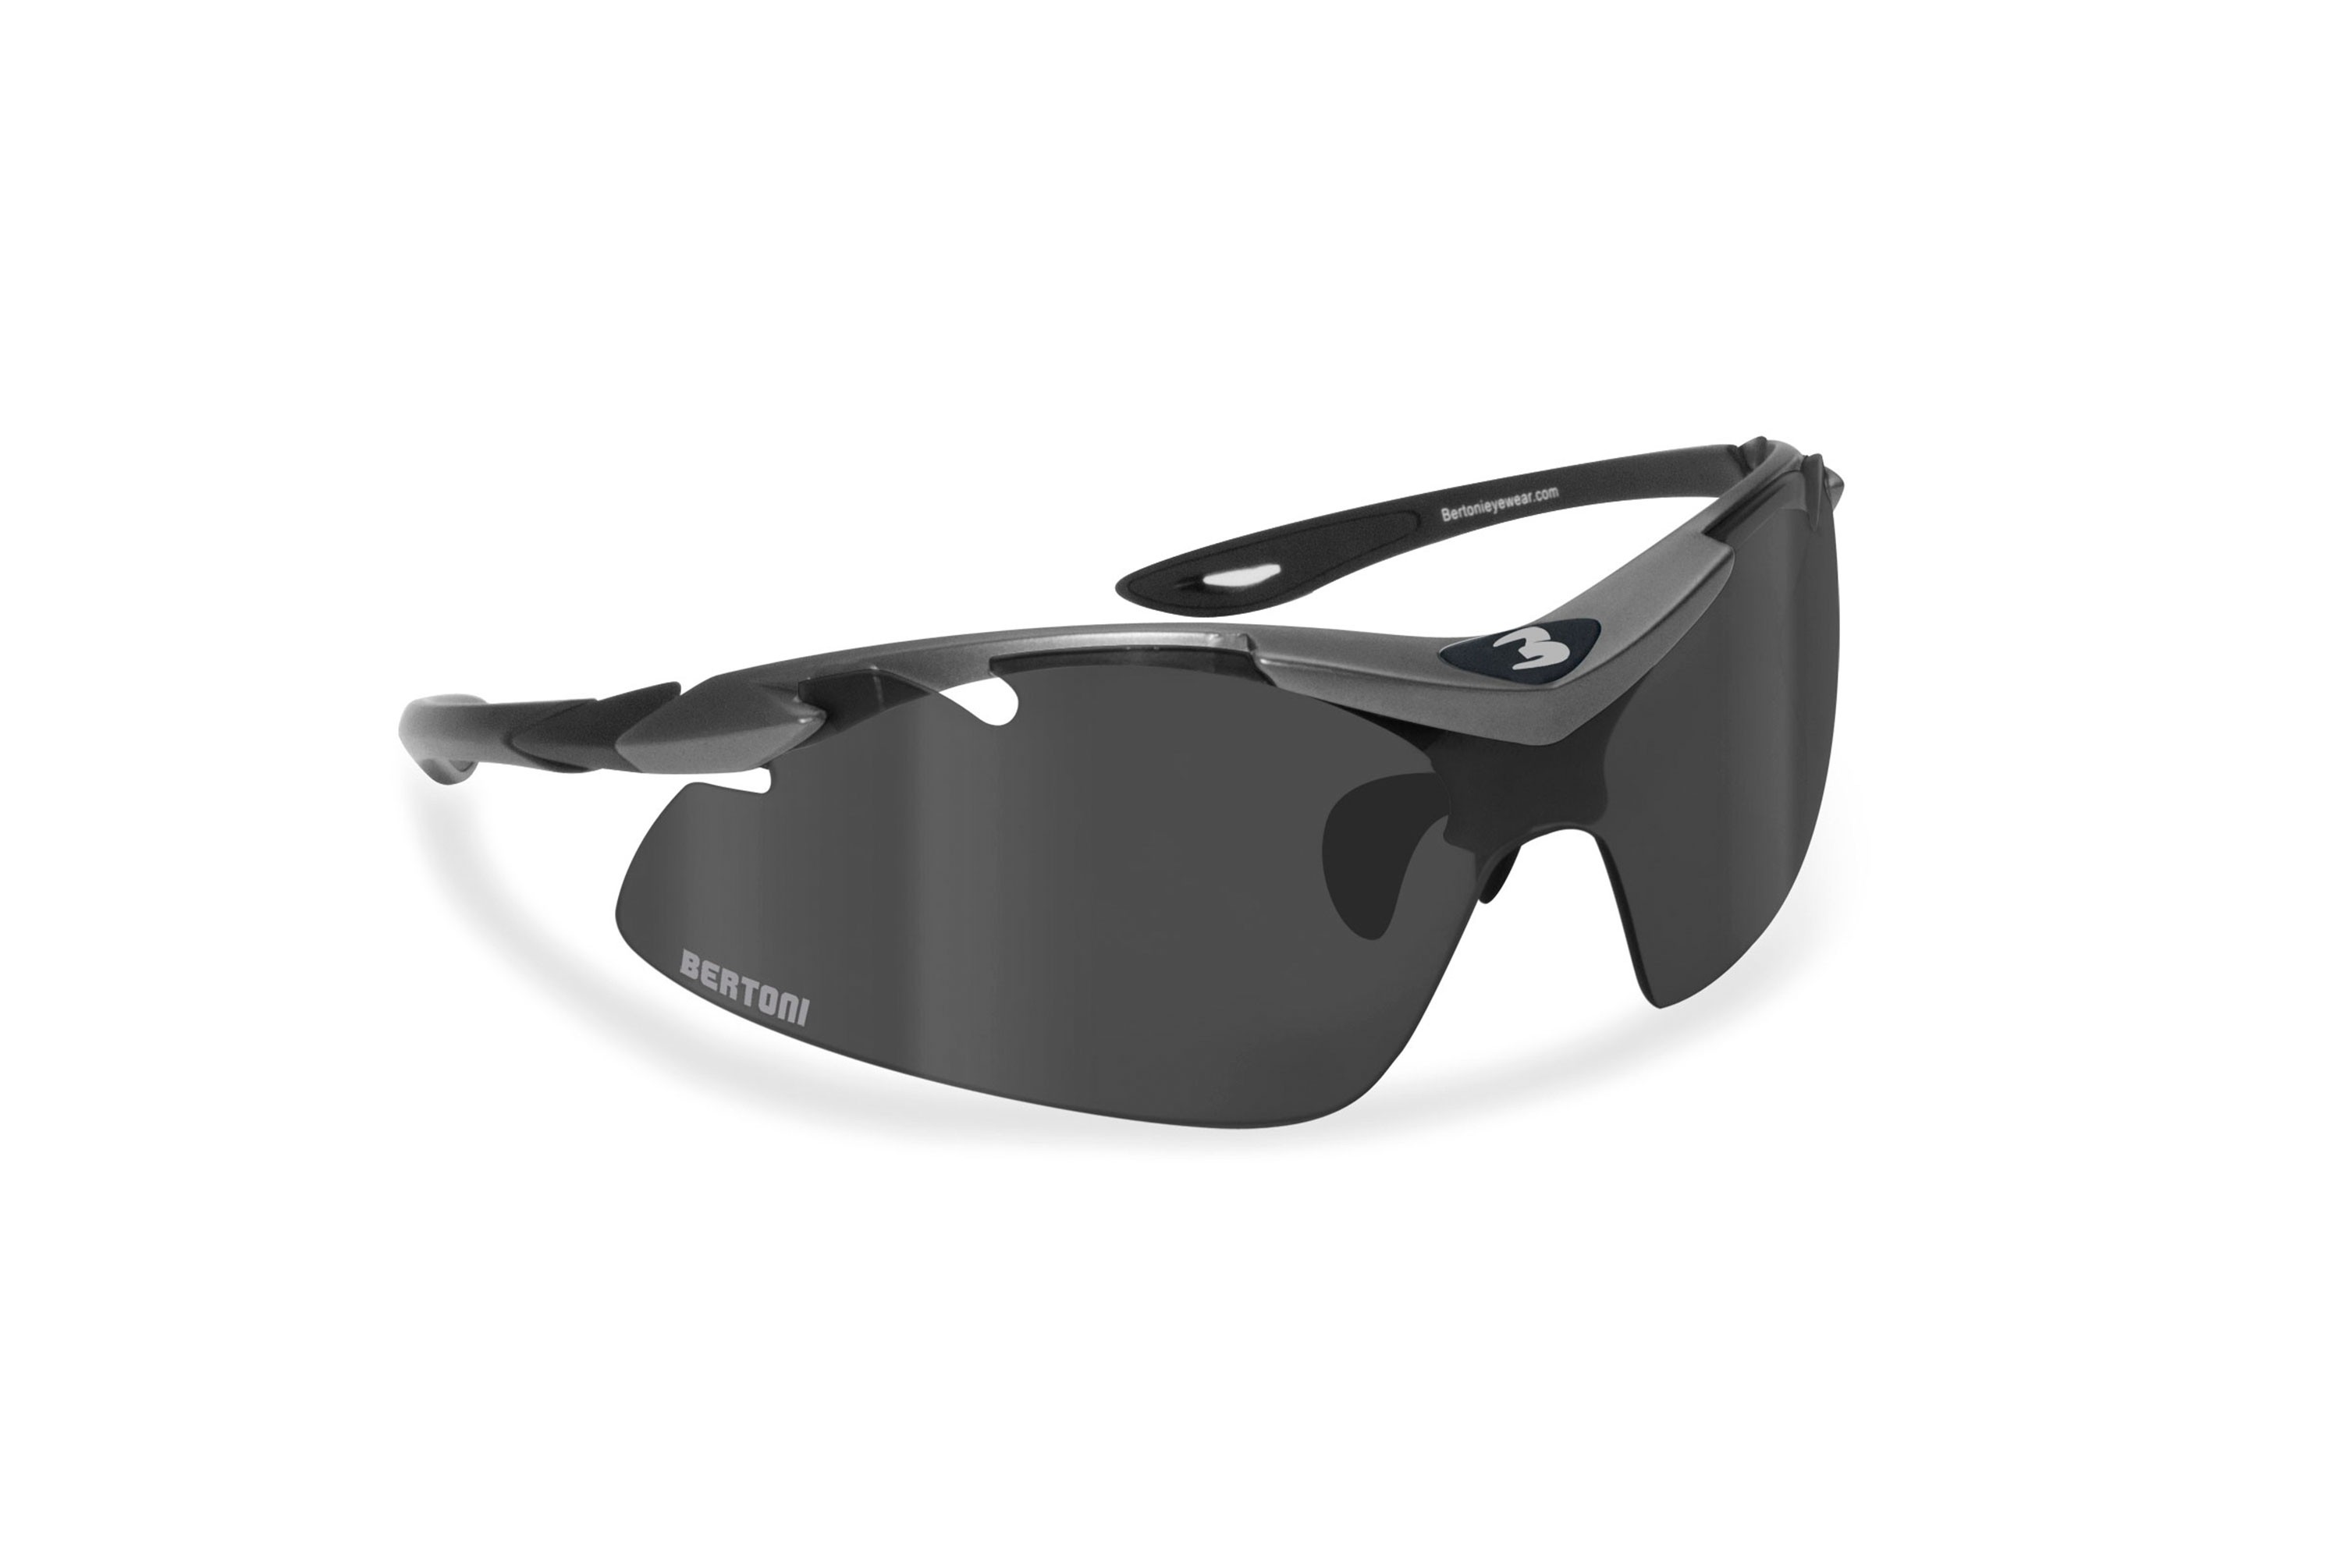 Occhiali per Ciclismo, Running e MTB con lente intercambiabile, antifog, nasello regolabile - Bertoni Italy AF900H